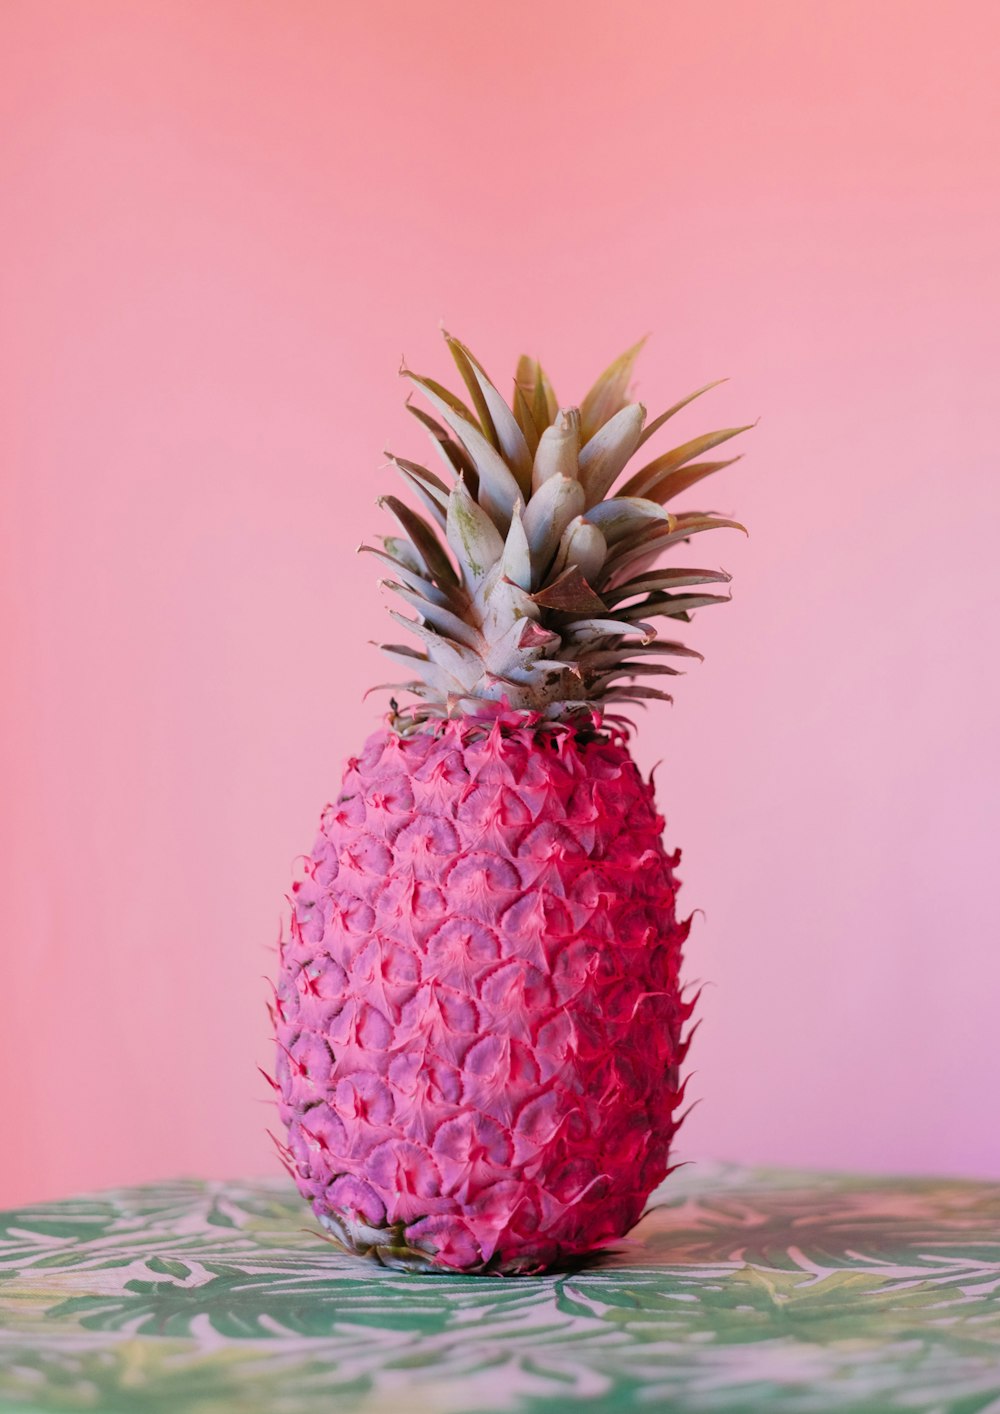 pink pineapple